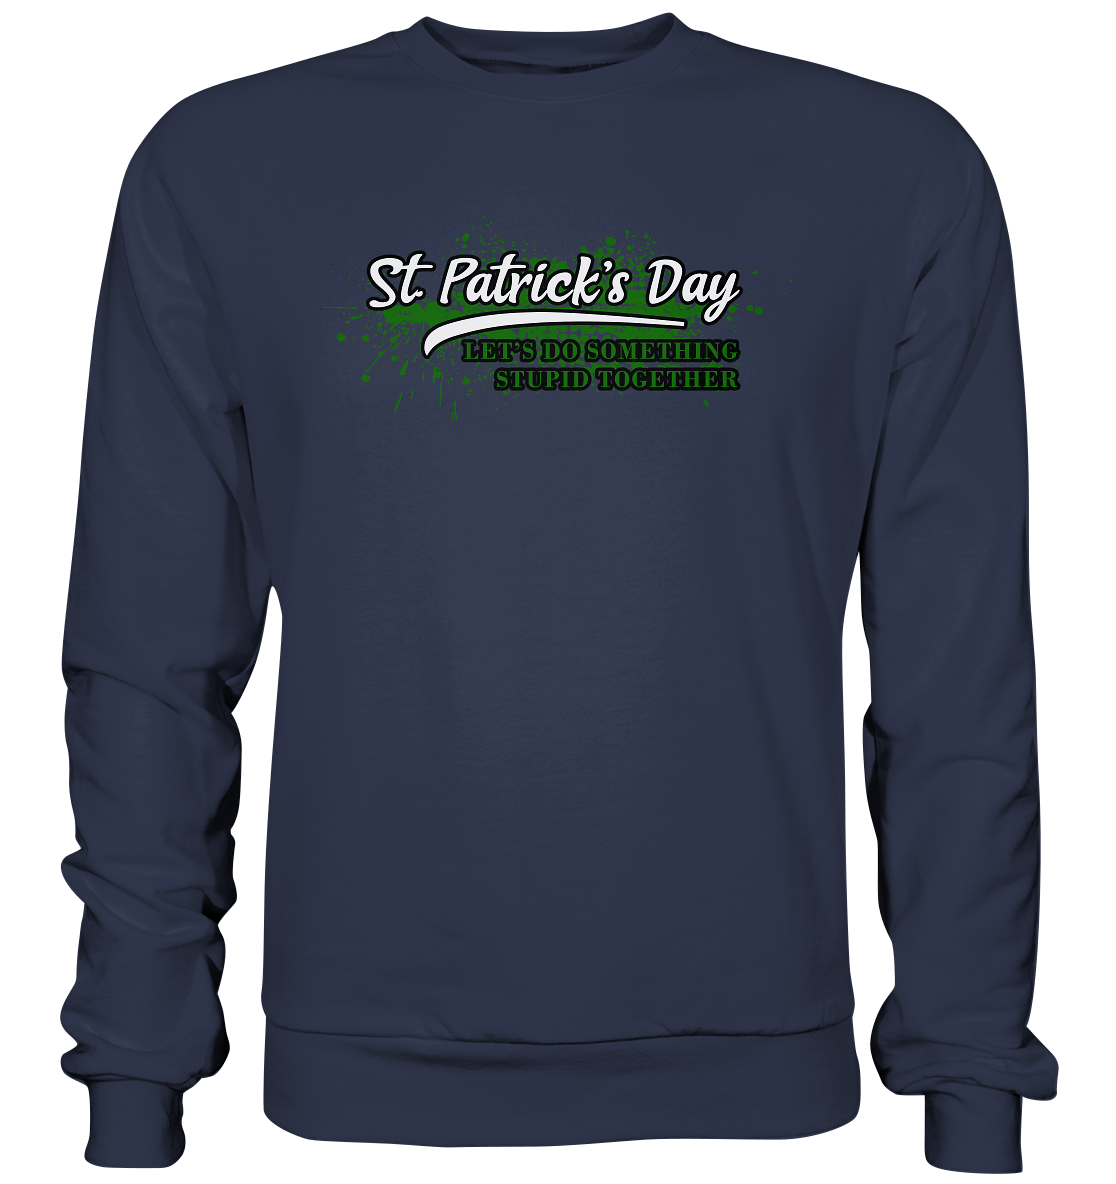 St. Patrick's Day "Let's Do Something Stupid Together" - Premium Sweatshirt